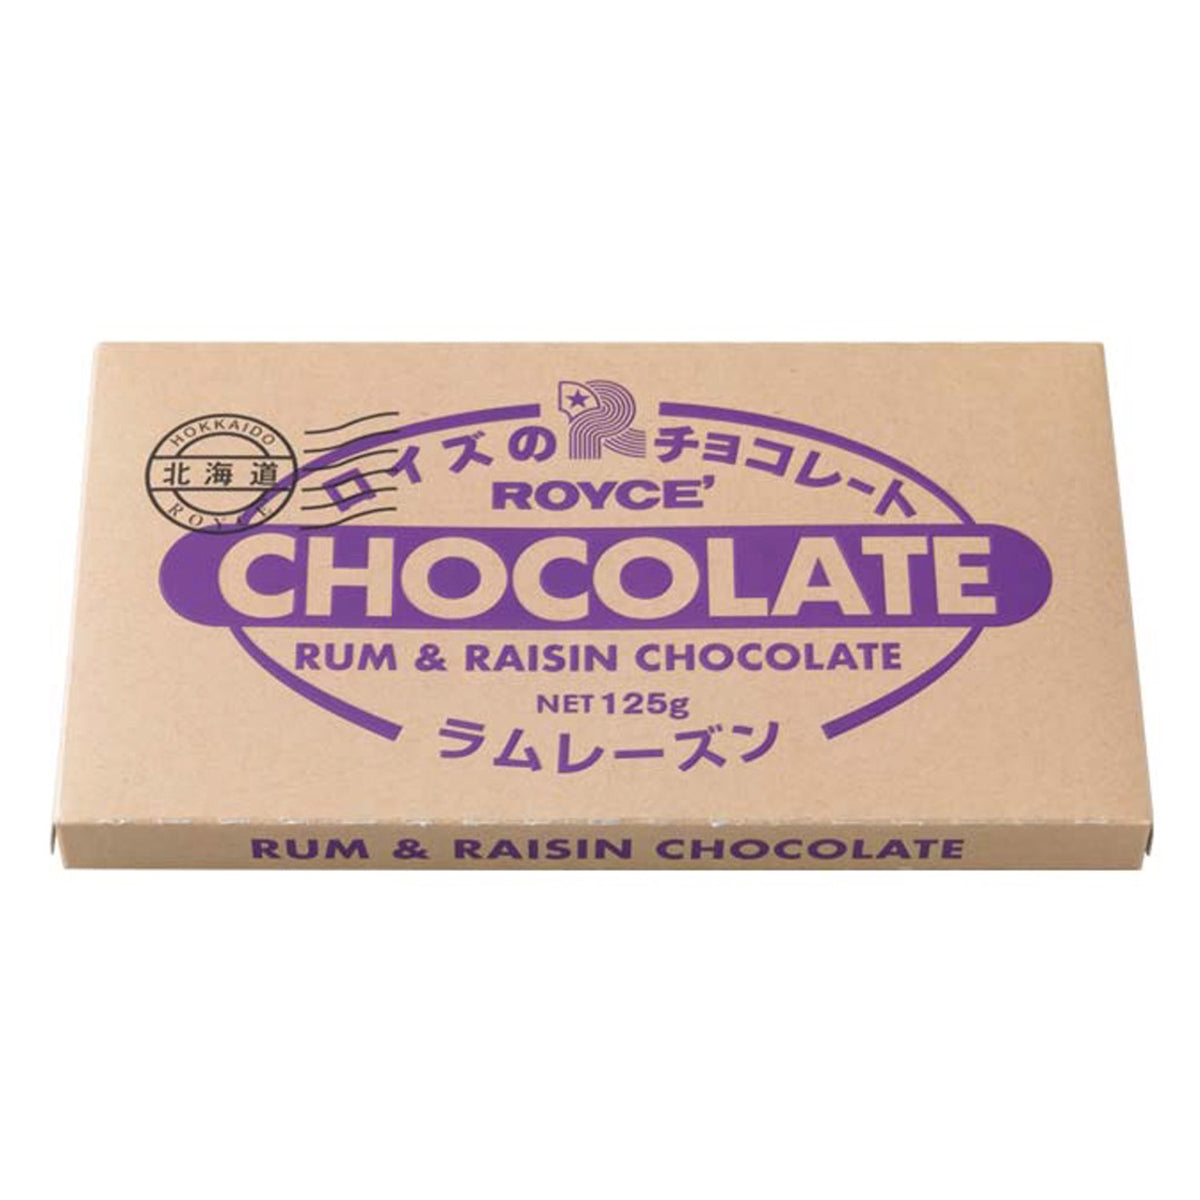 ROYCE' Chocolate - Chocolate Bar "Rum Raisin" - Image shows a chocolate carton. Text in black says Hokkaido ROYCE'. Text in purple says ROYCE' Chocolate Rum & Raisin Chocolate Net 125g. Text on bottom part says Rum & Raisin Chocolate.